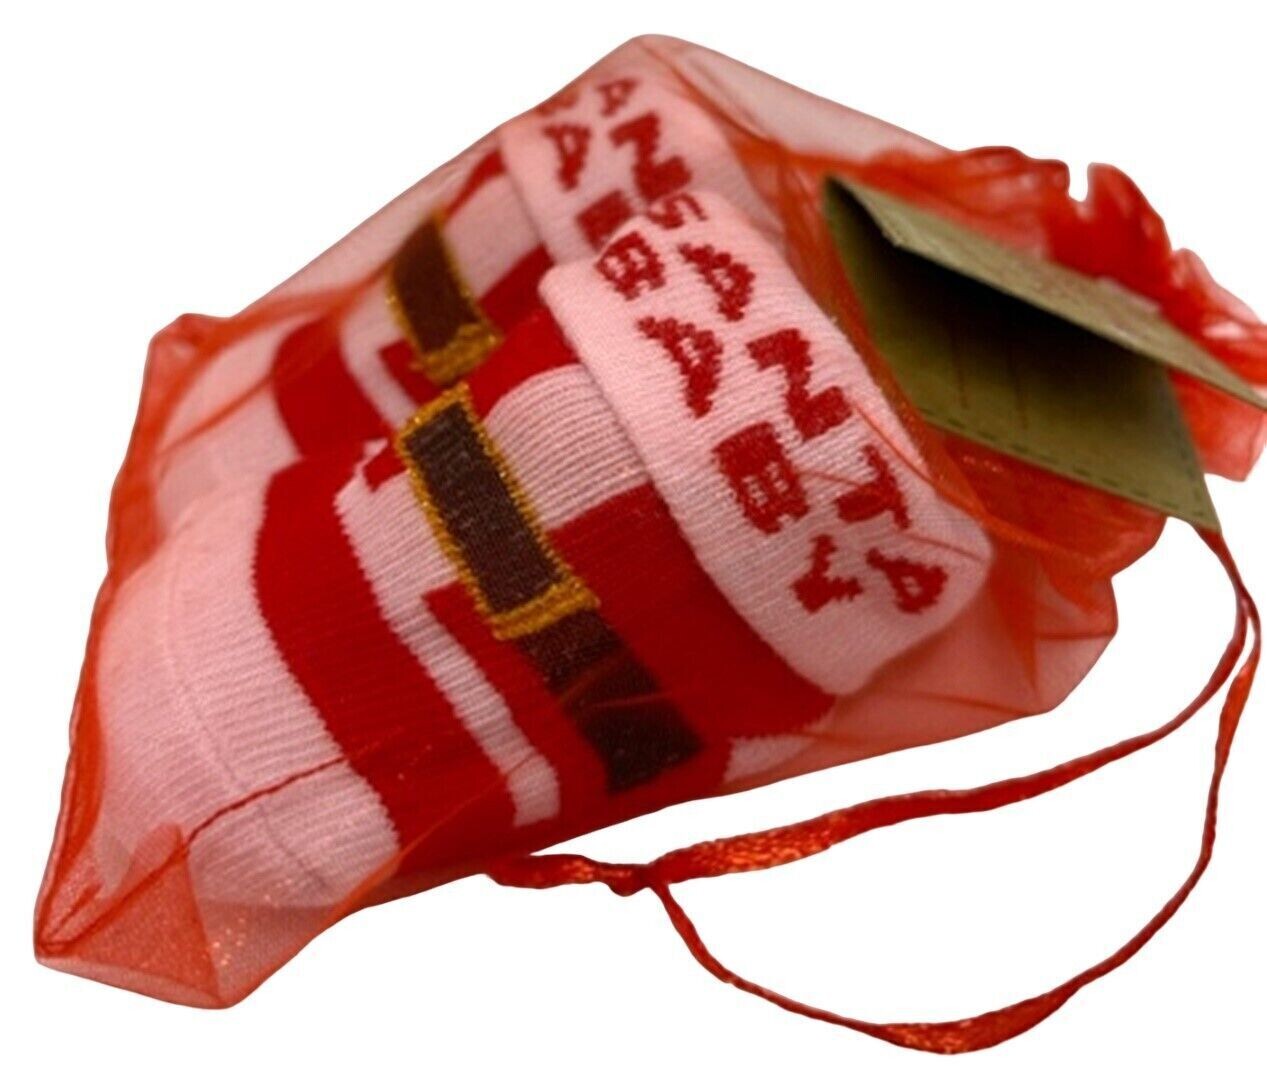 2 pairs Baby Christmas Bootees (Santa Baby) size 0-6m
Novelty in Organza Bags